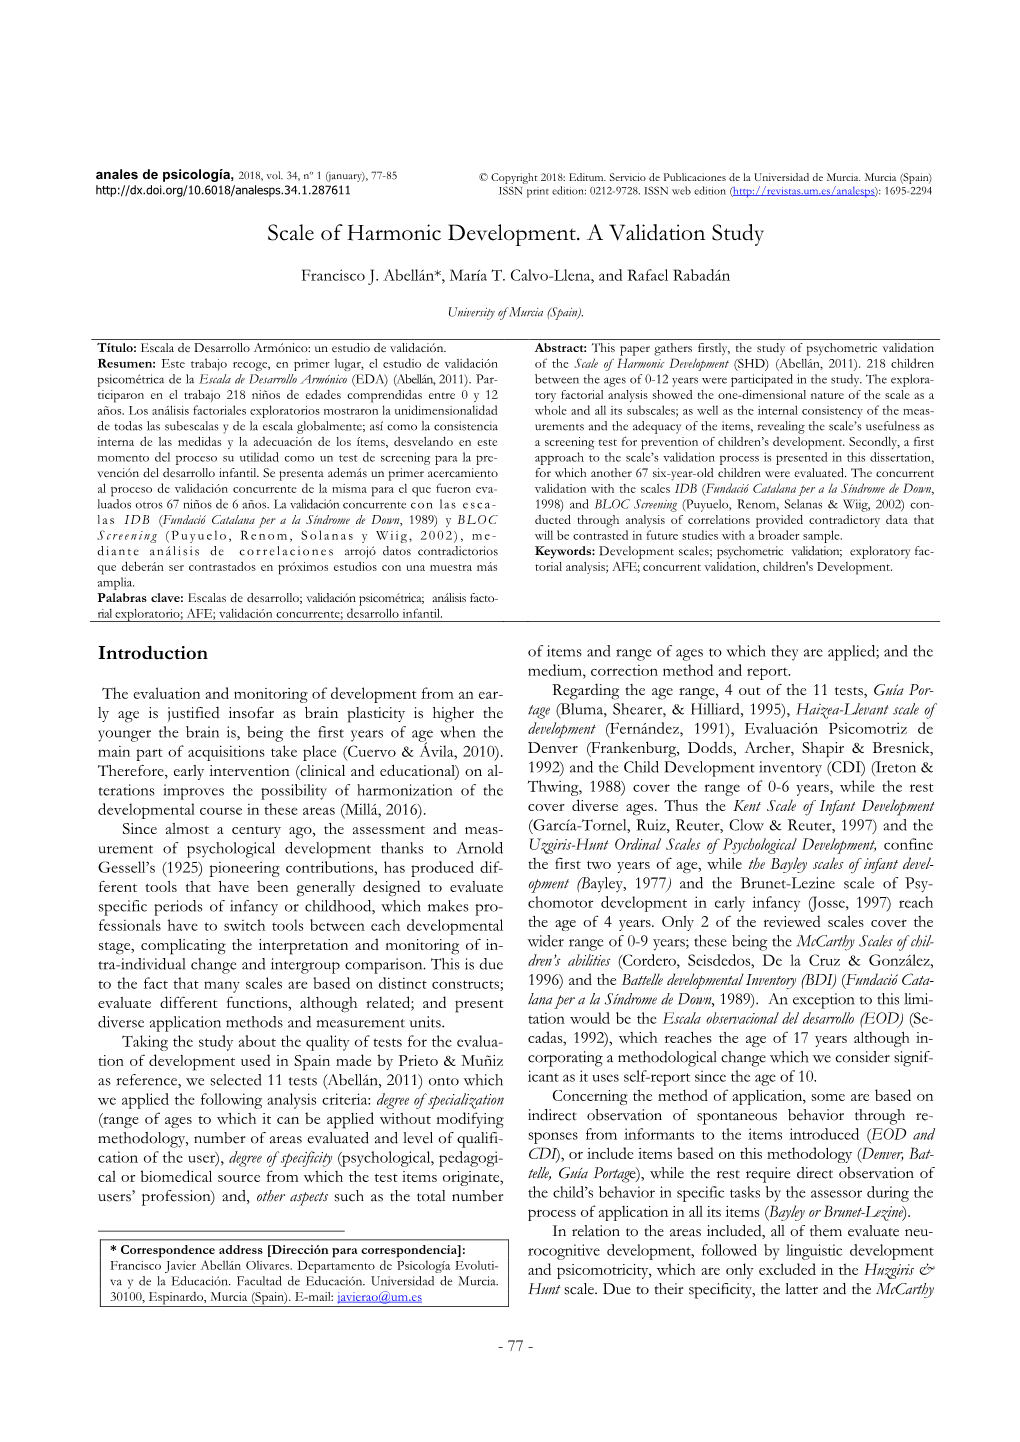 Scale of Harmonic Development. a Validation Study